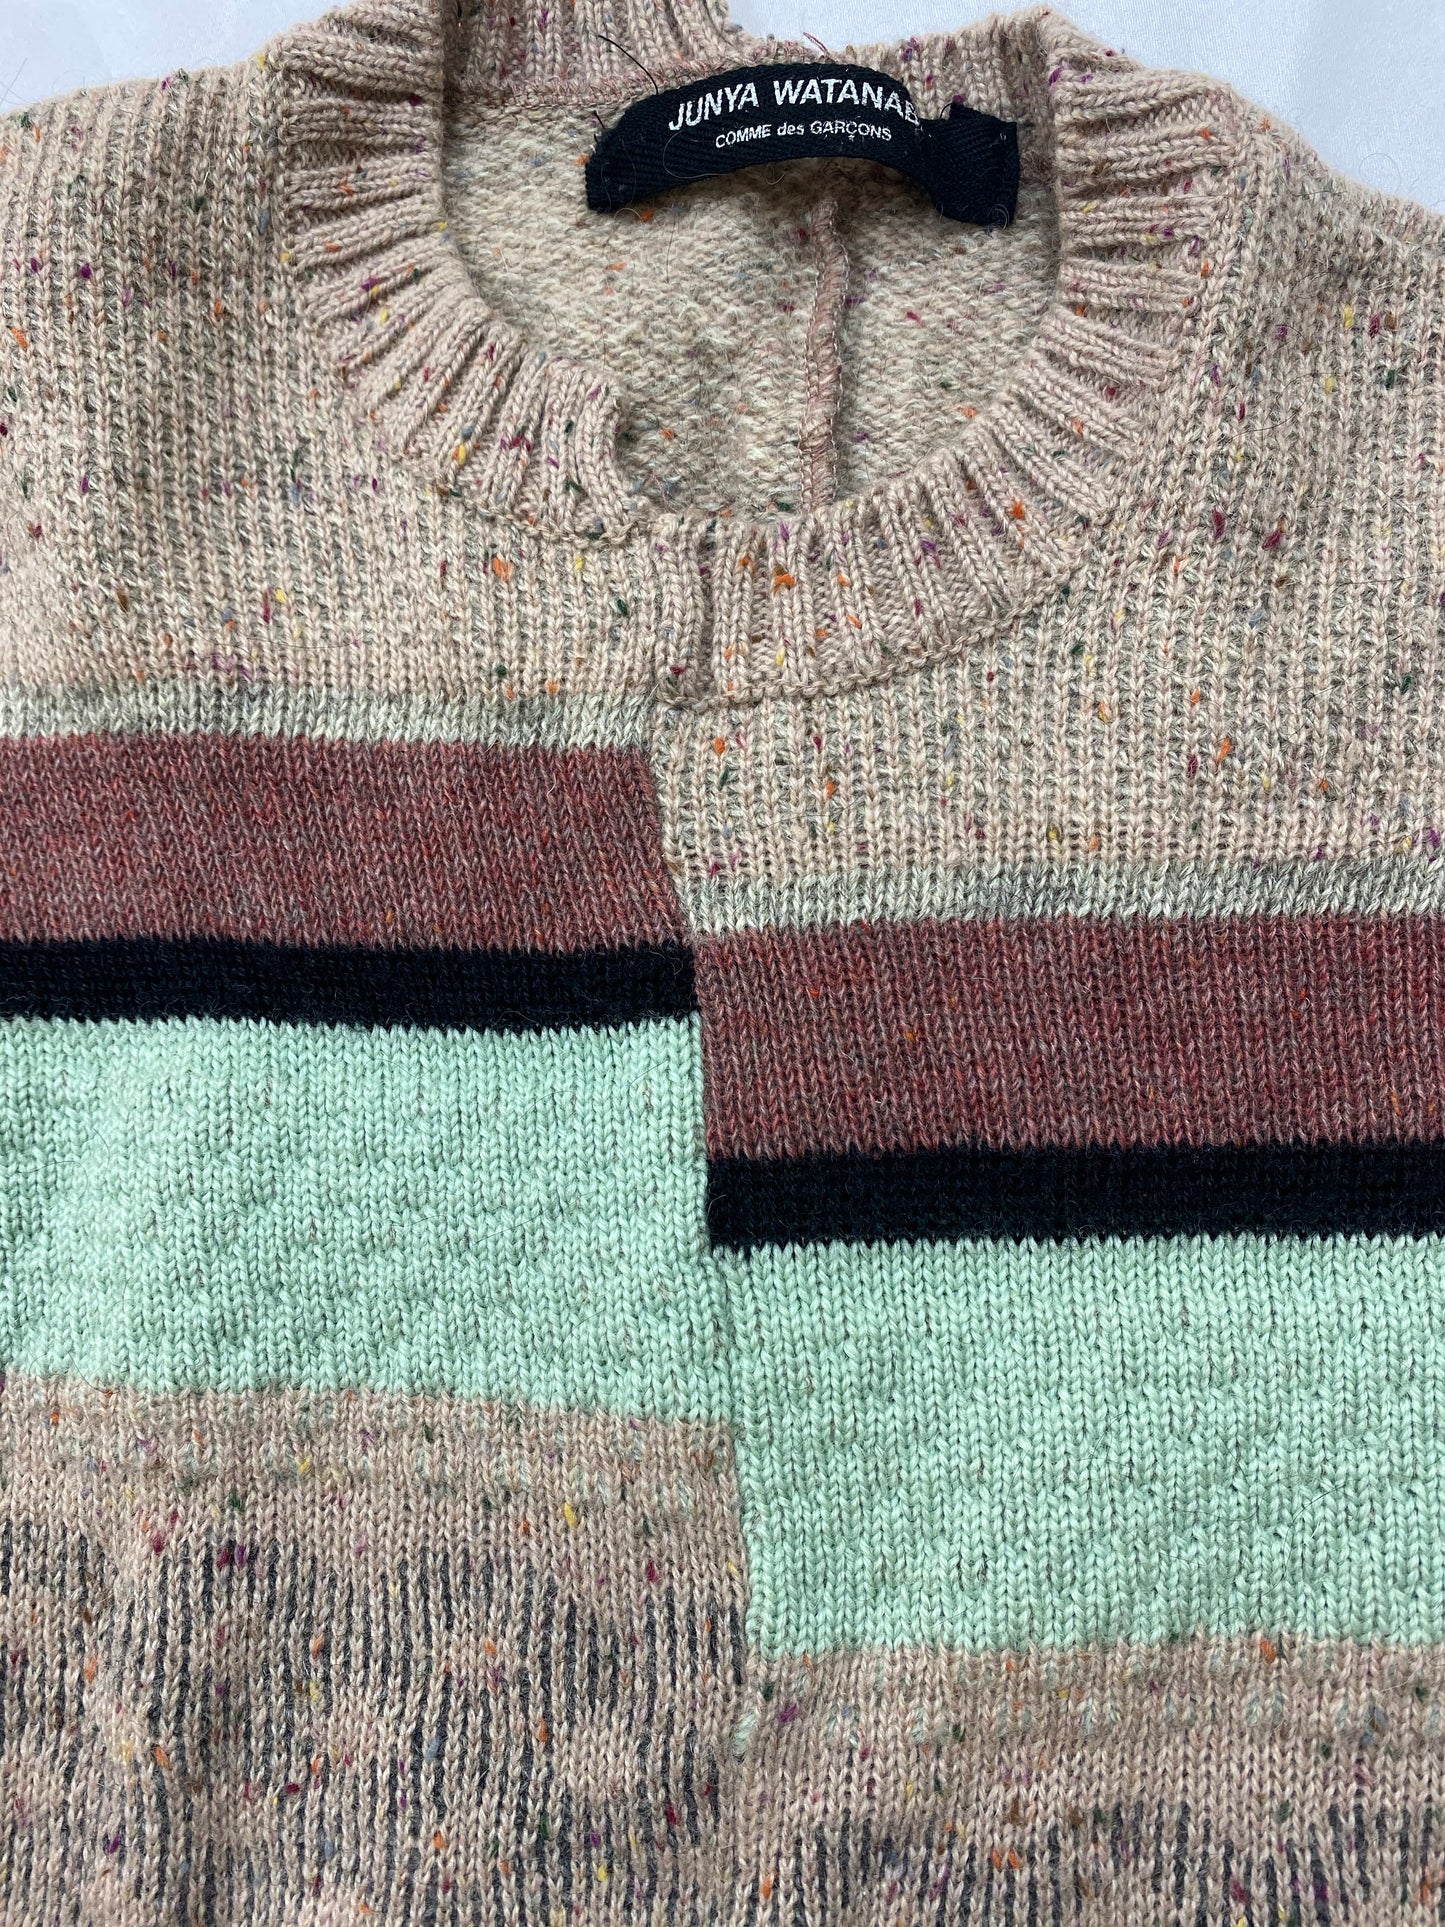 Junya Watanabe rebuild knit sweater A/W97